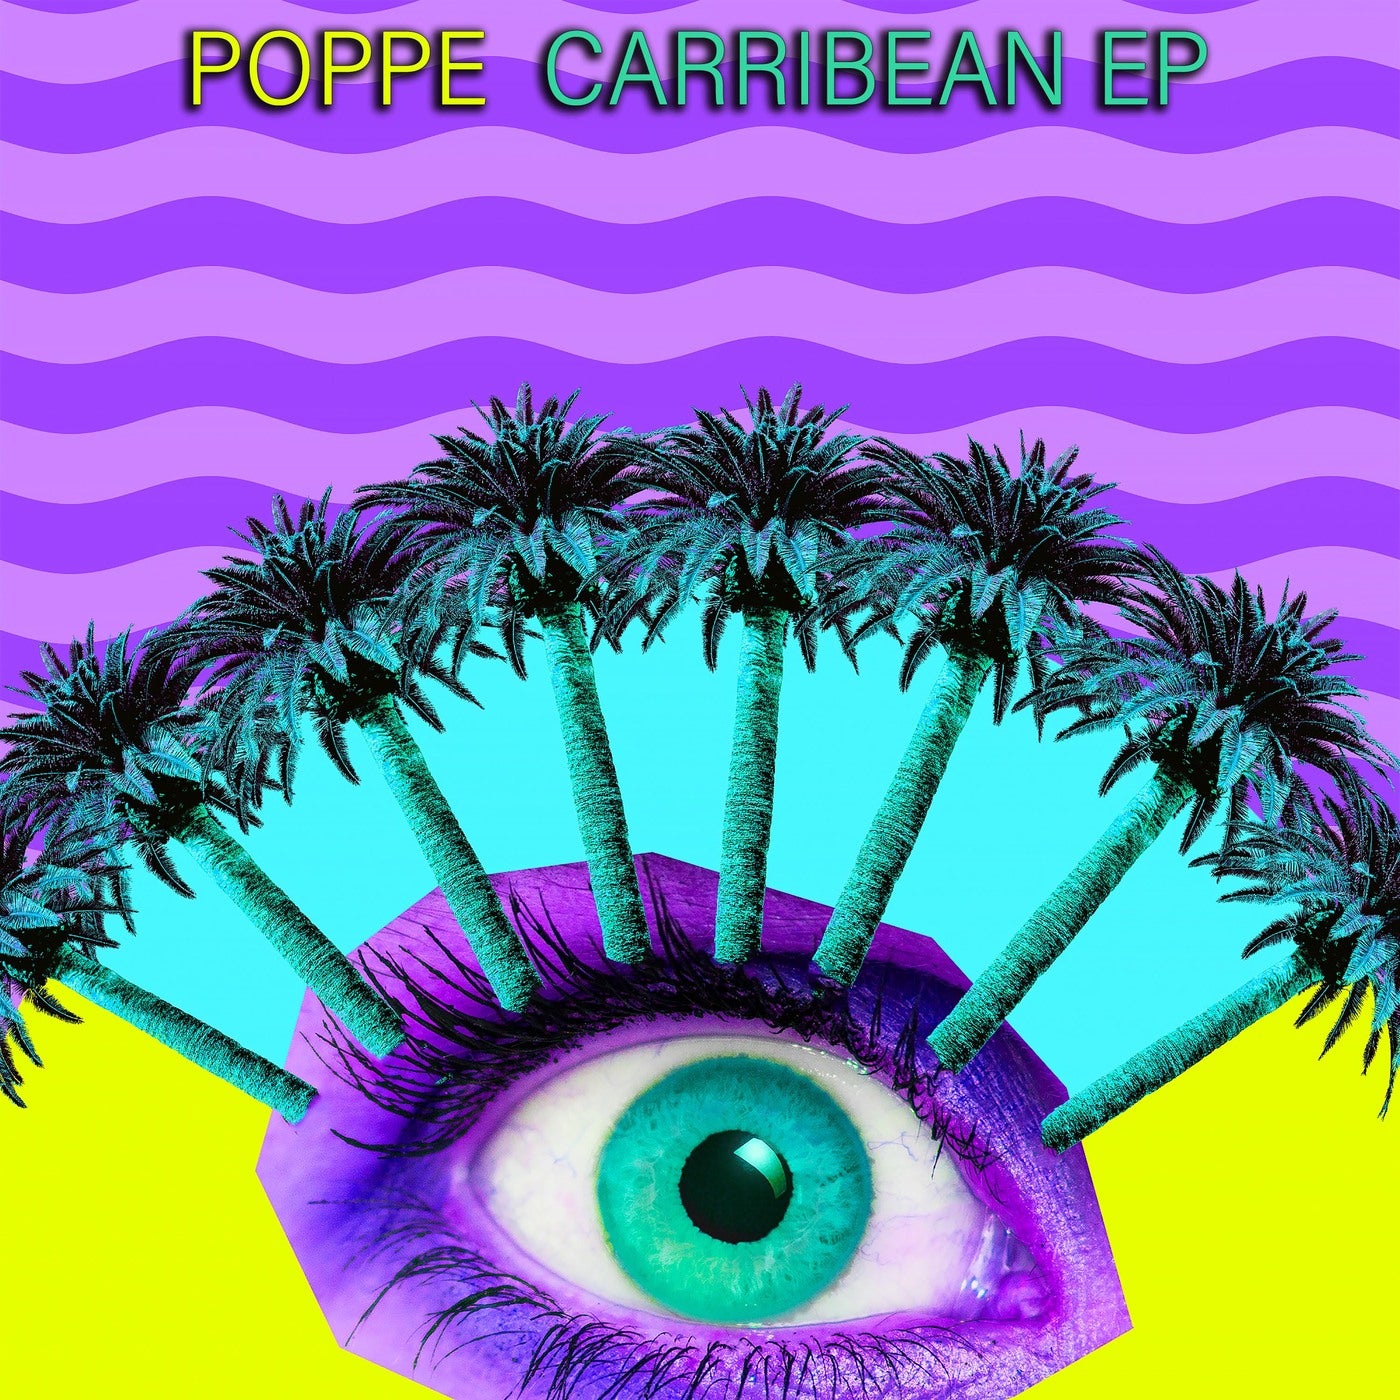 Carribean EP